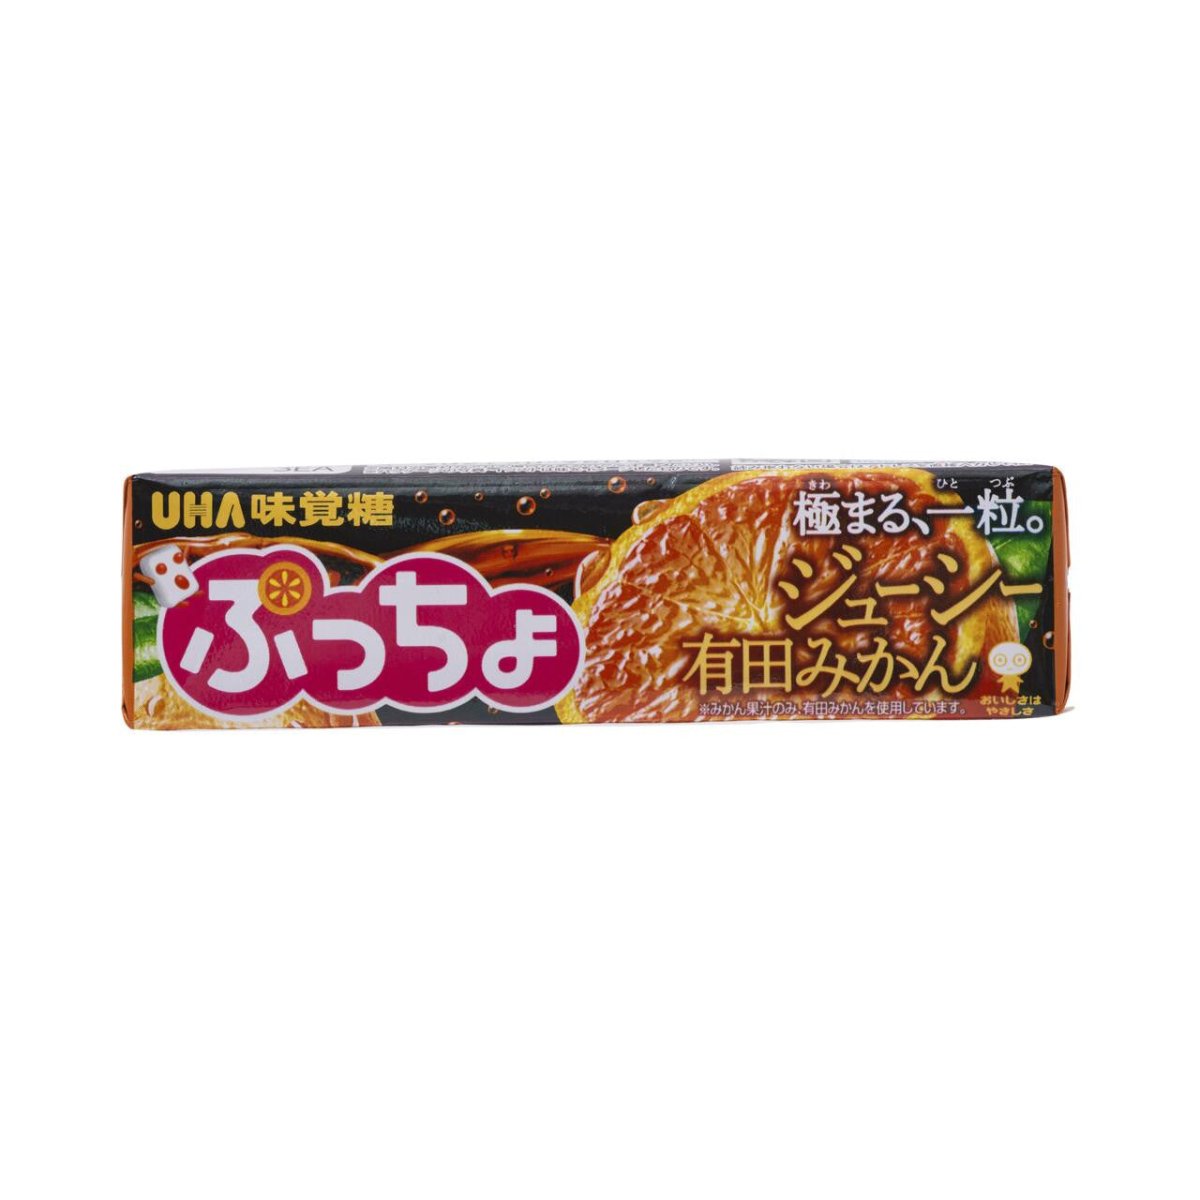 UHA Mikakuto Puccho Stick Juice Arita Mandarin Orange 50g - Candy Mail UK